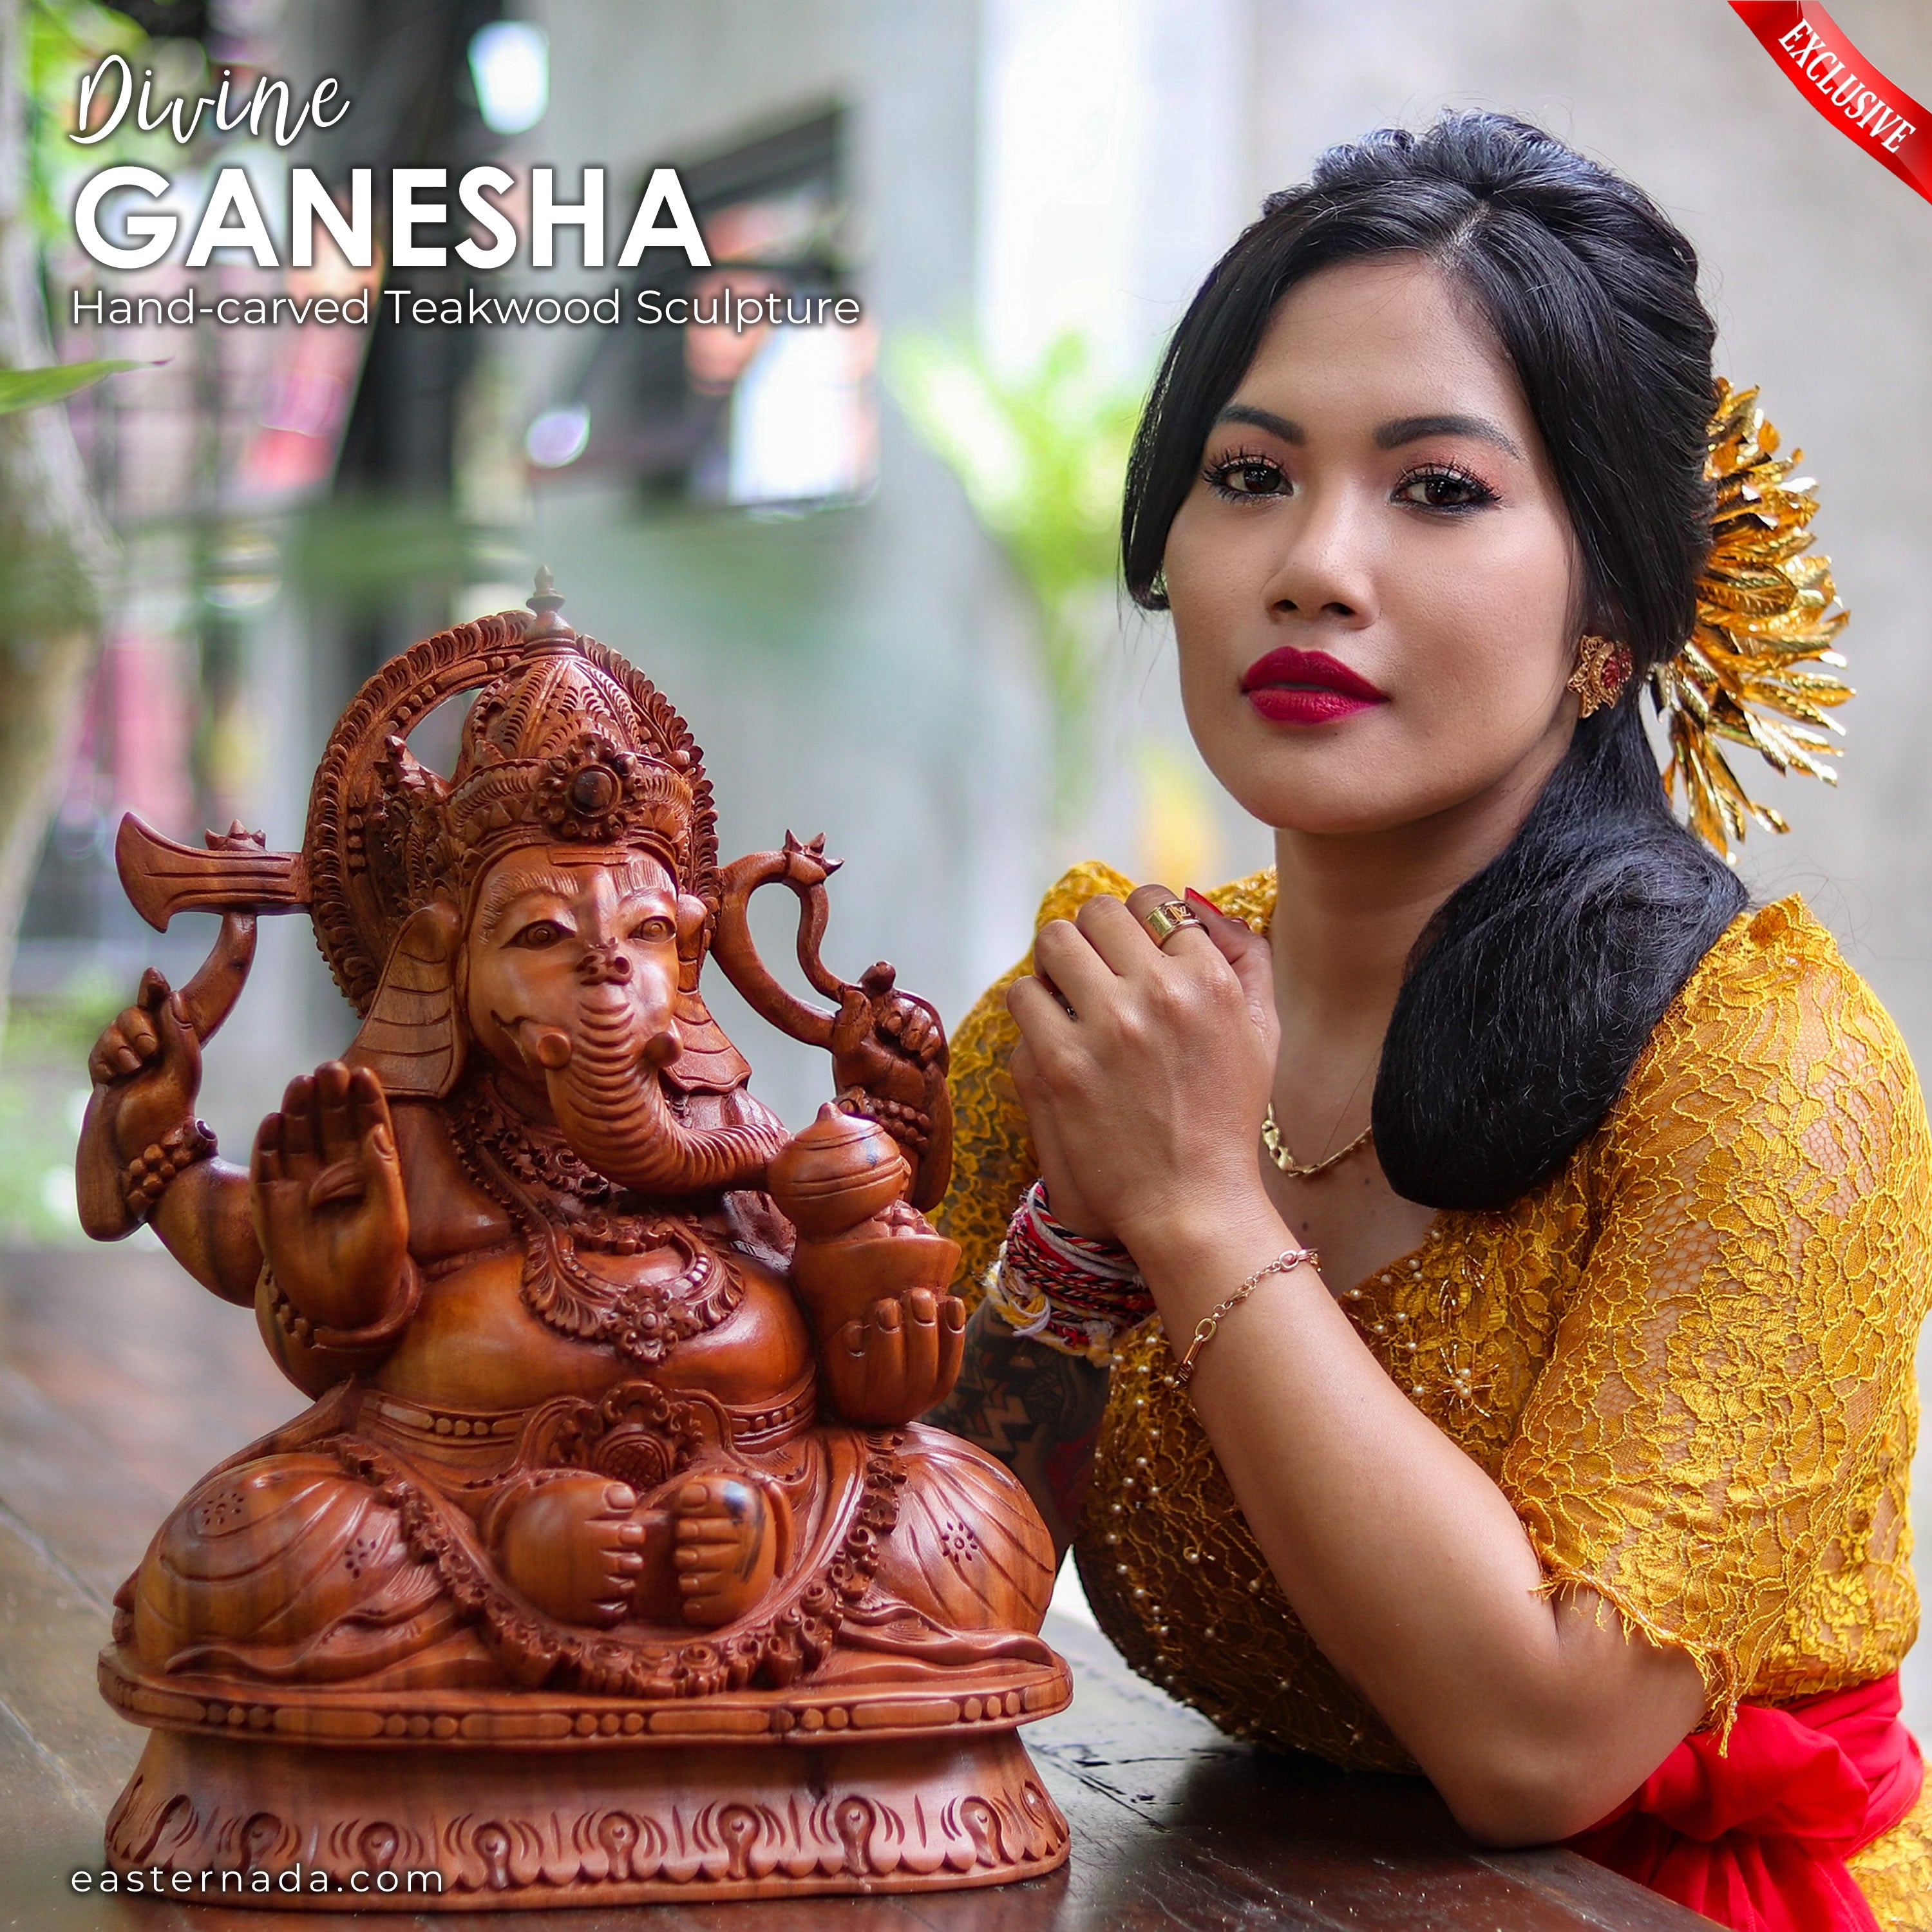 Ganesha Hindu God - Teakwood Hand-Carved Sculpture